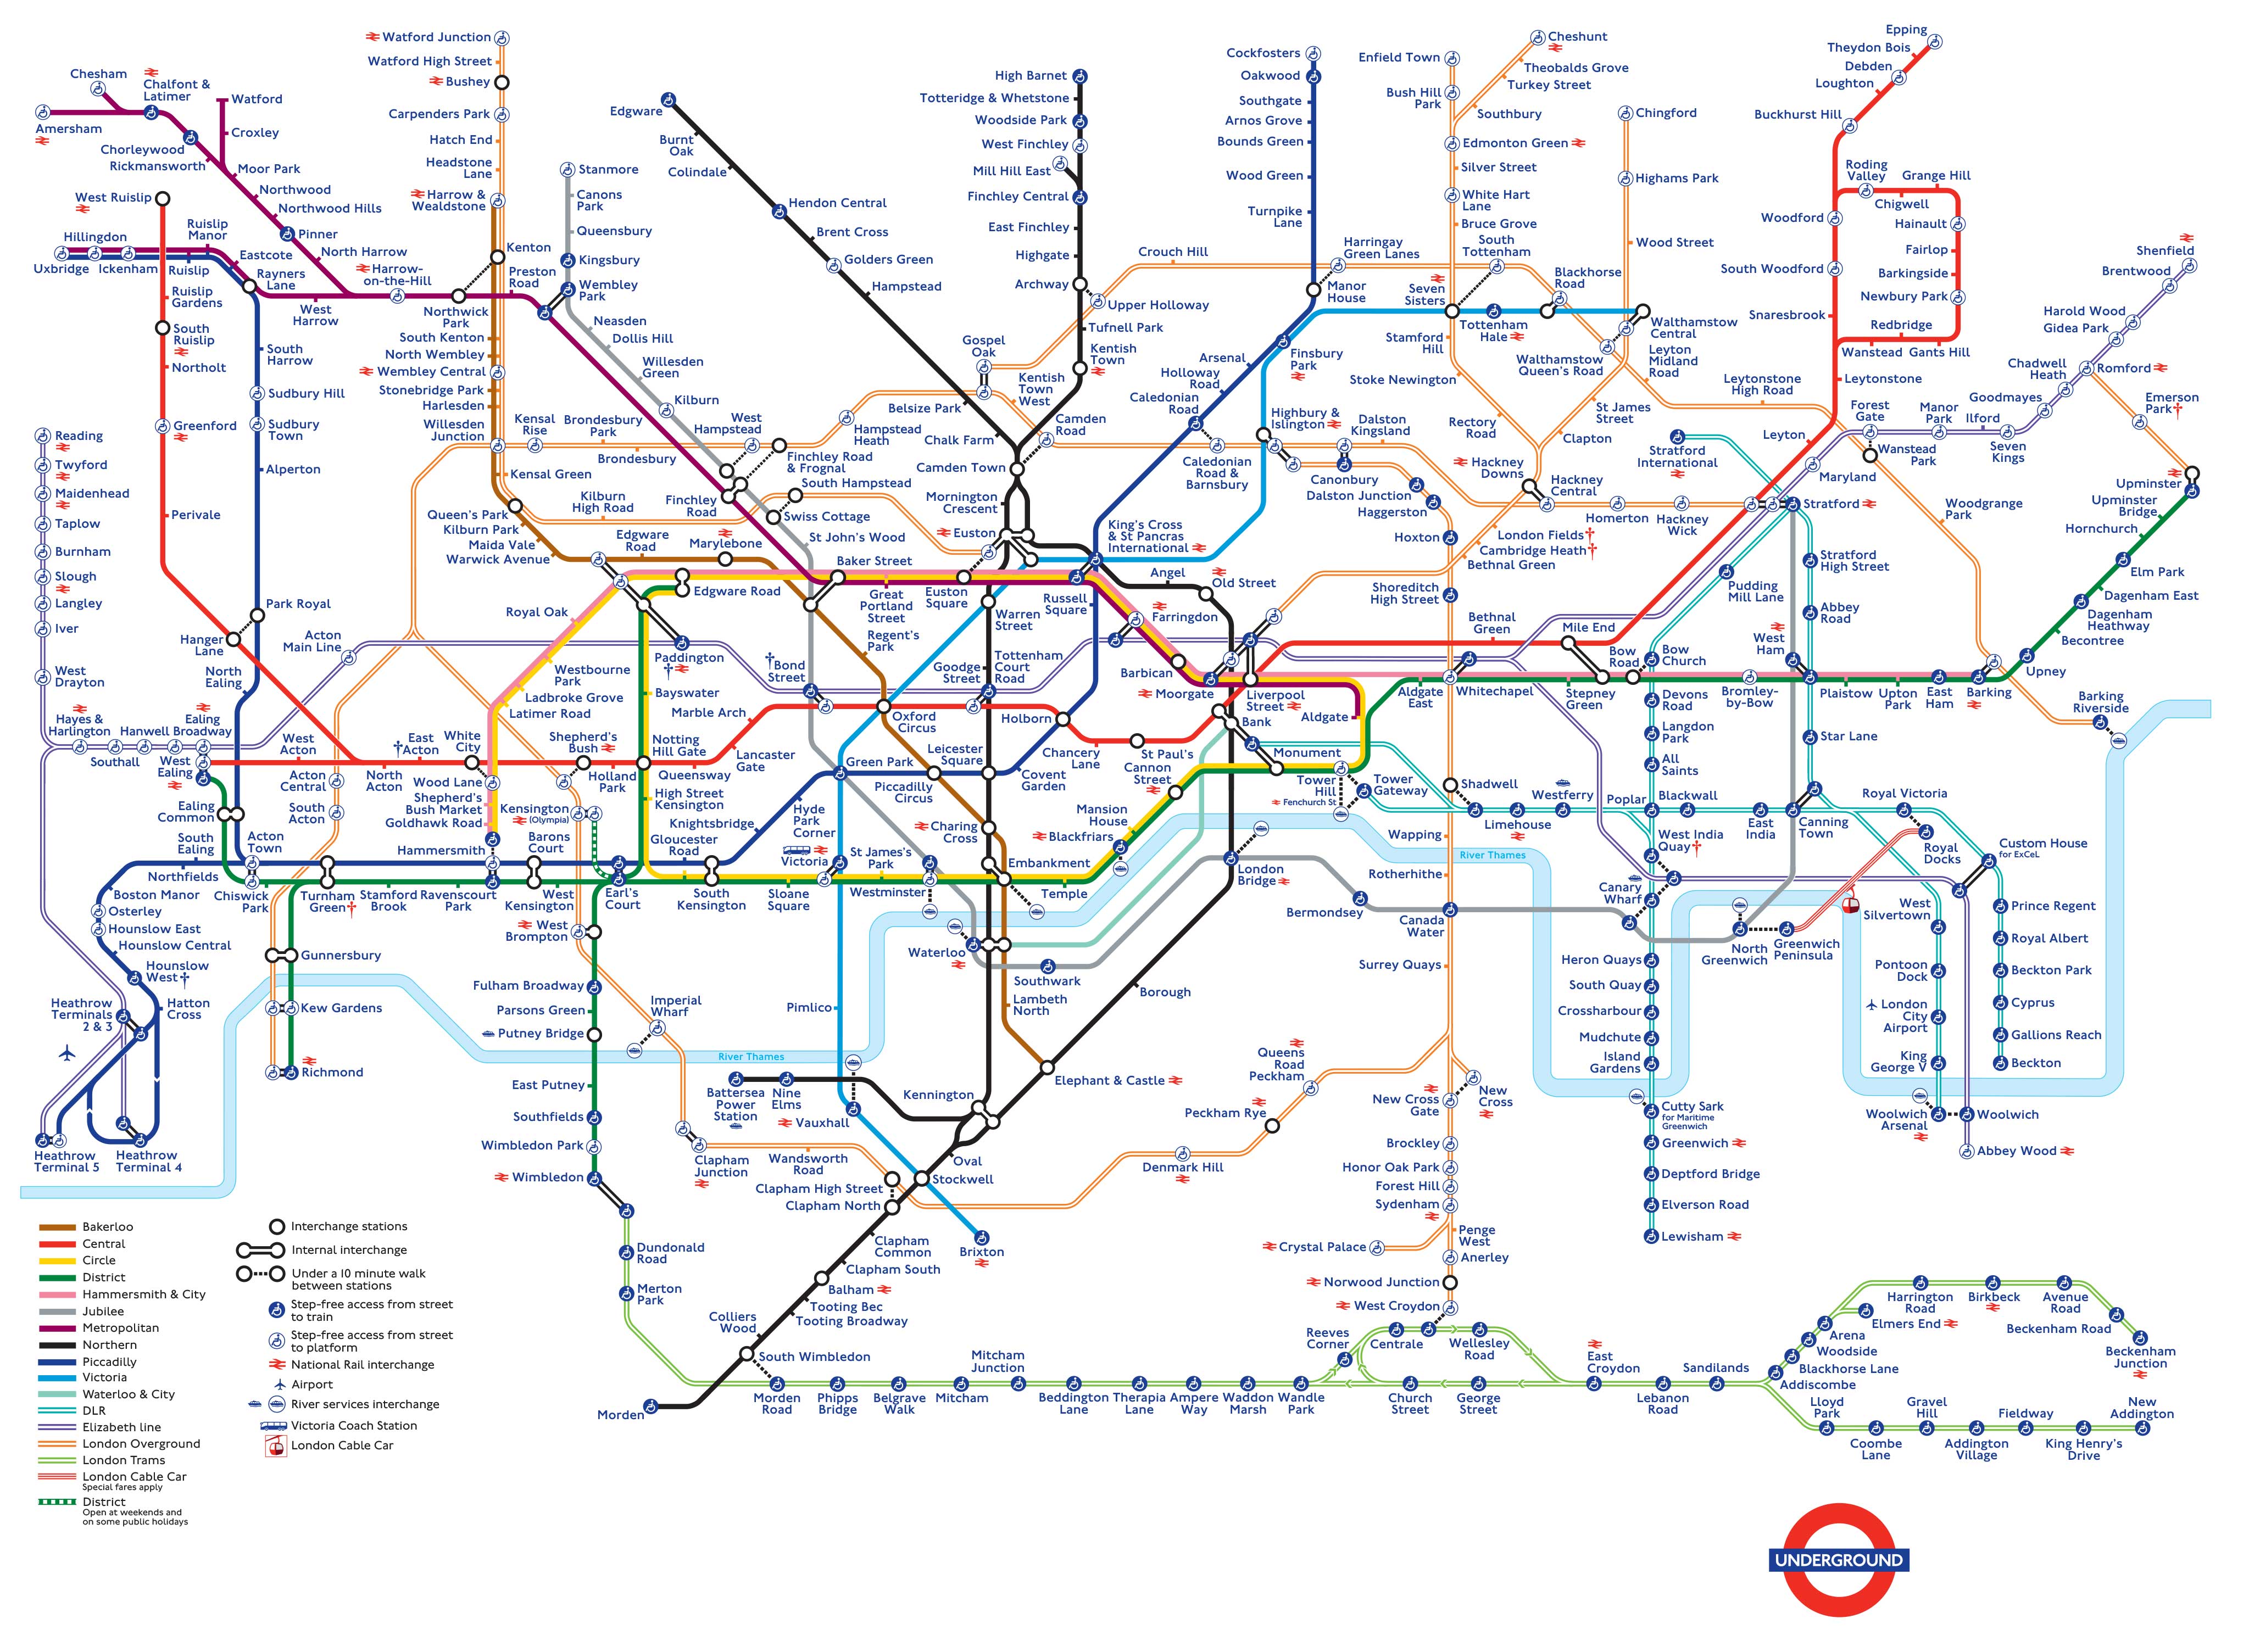 London Underground Map Canvas London Underground Tube Map Poster